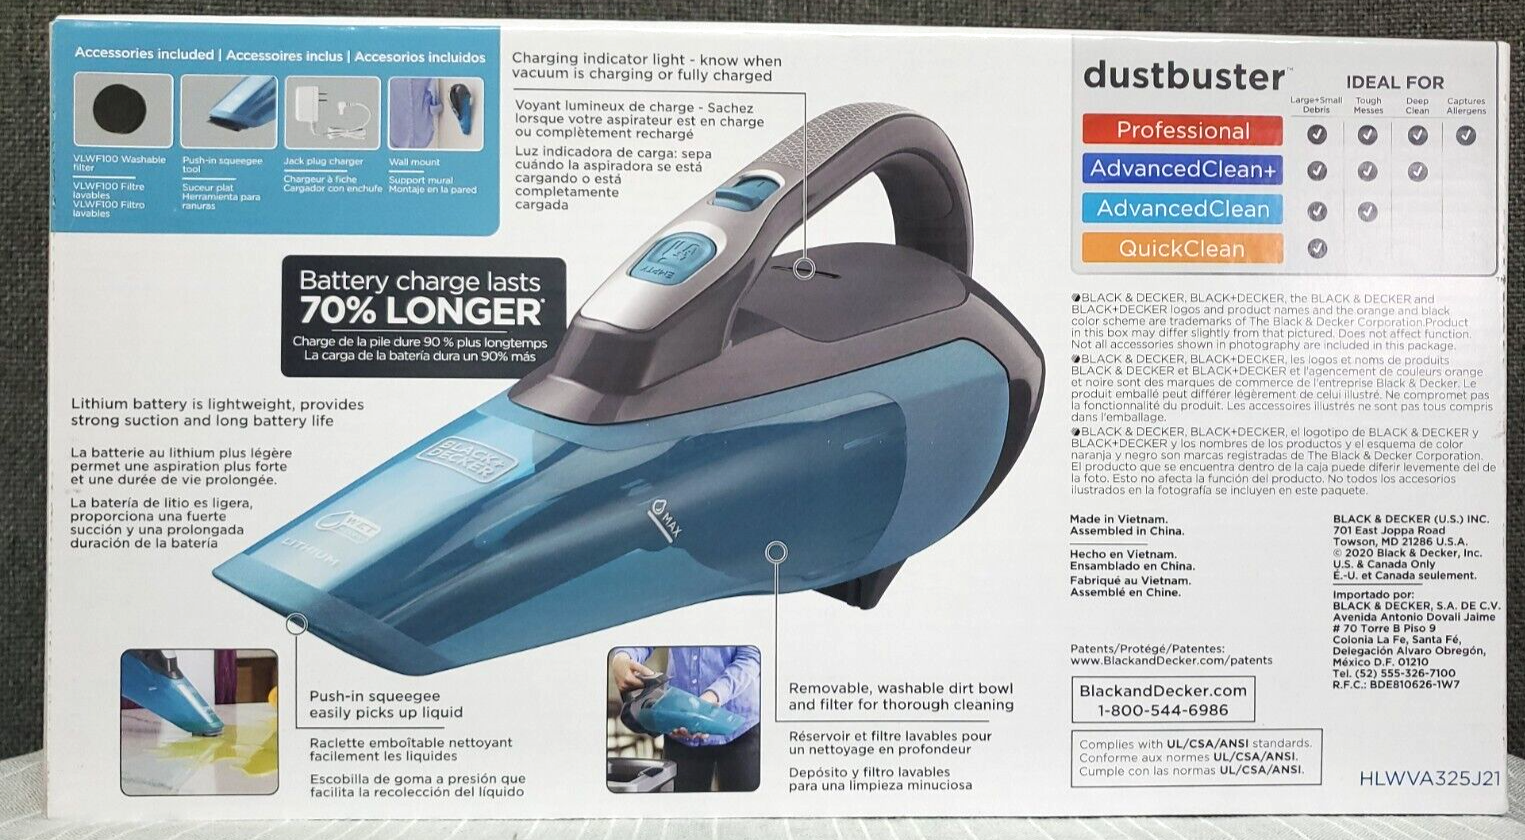 Black + Decker Dustbuster Adv Clean Wet/Dry Cordless Hand Vacuum  HLWVA325J21 NEW